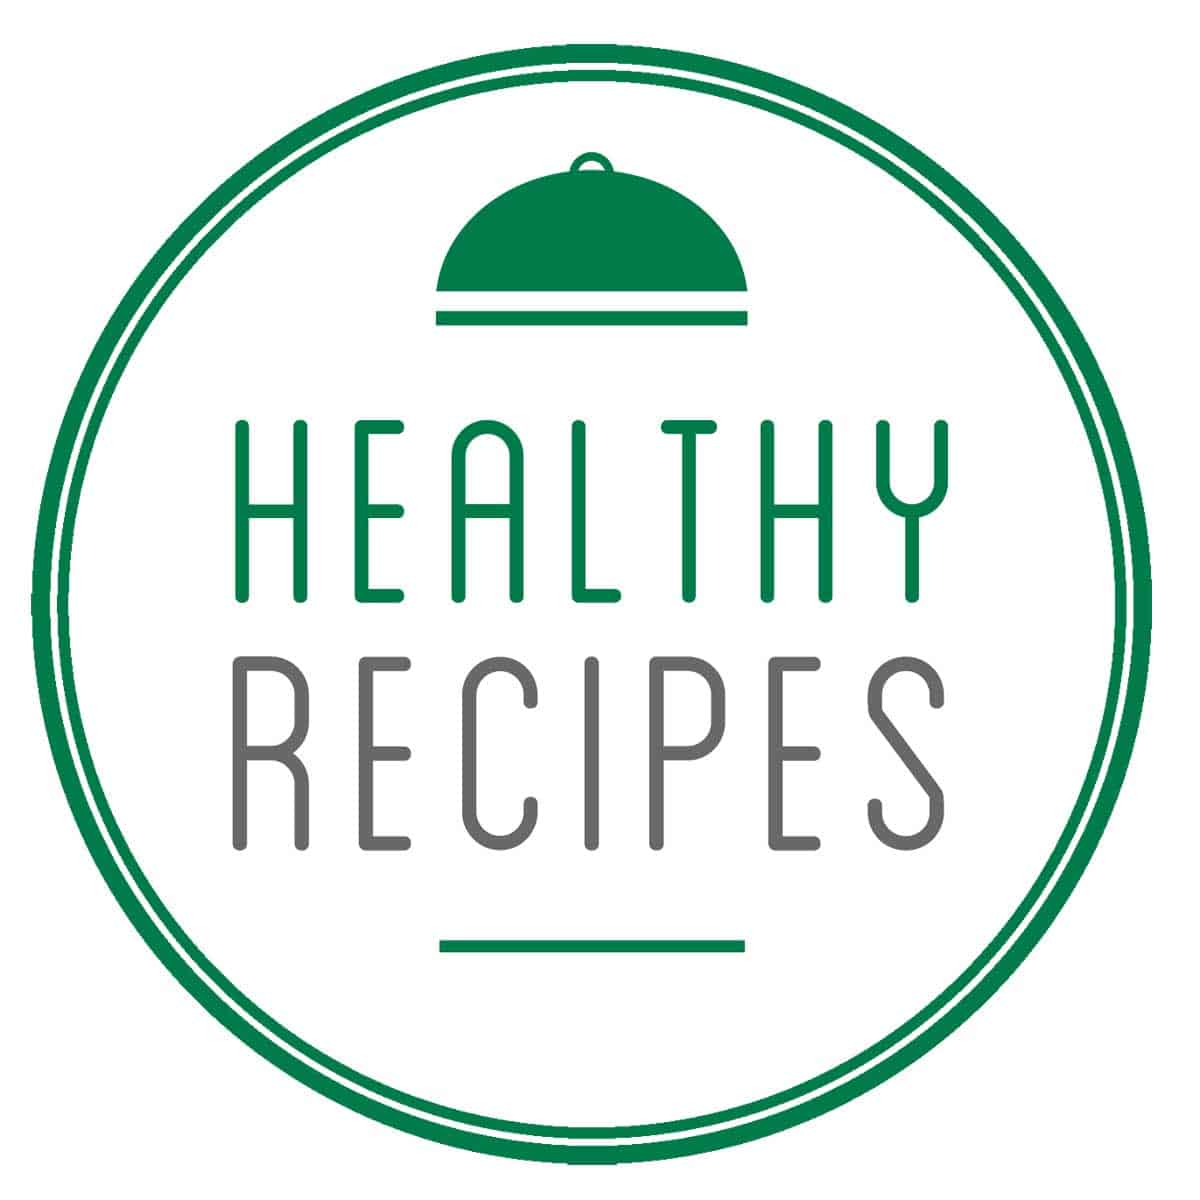 Healthy Recipes Blog logo